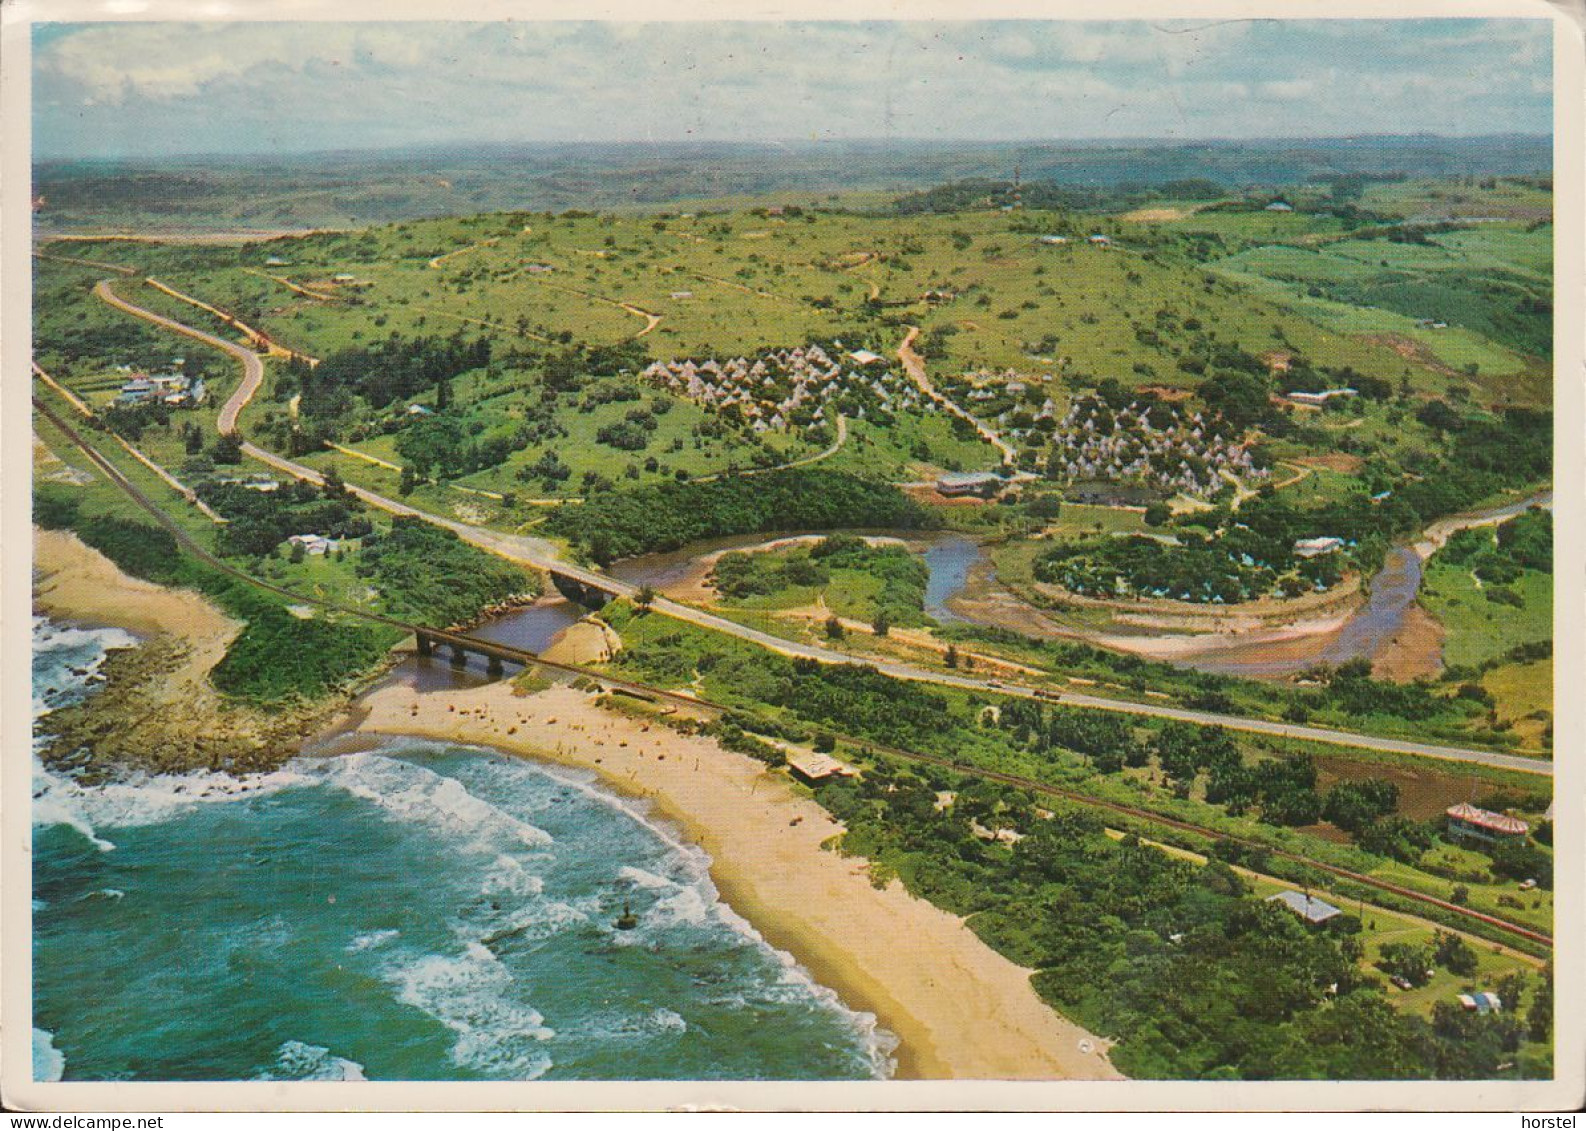 South Africa - Hibberdene - South Coast Natal - Railway With Bridge - Aerial View - Nice Stamp - Südafrika